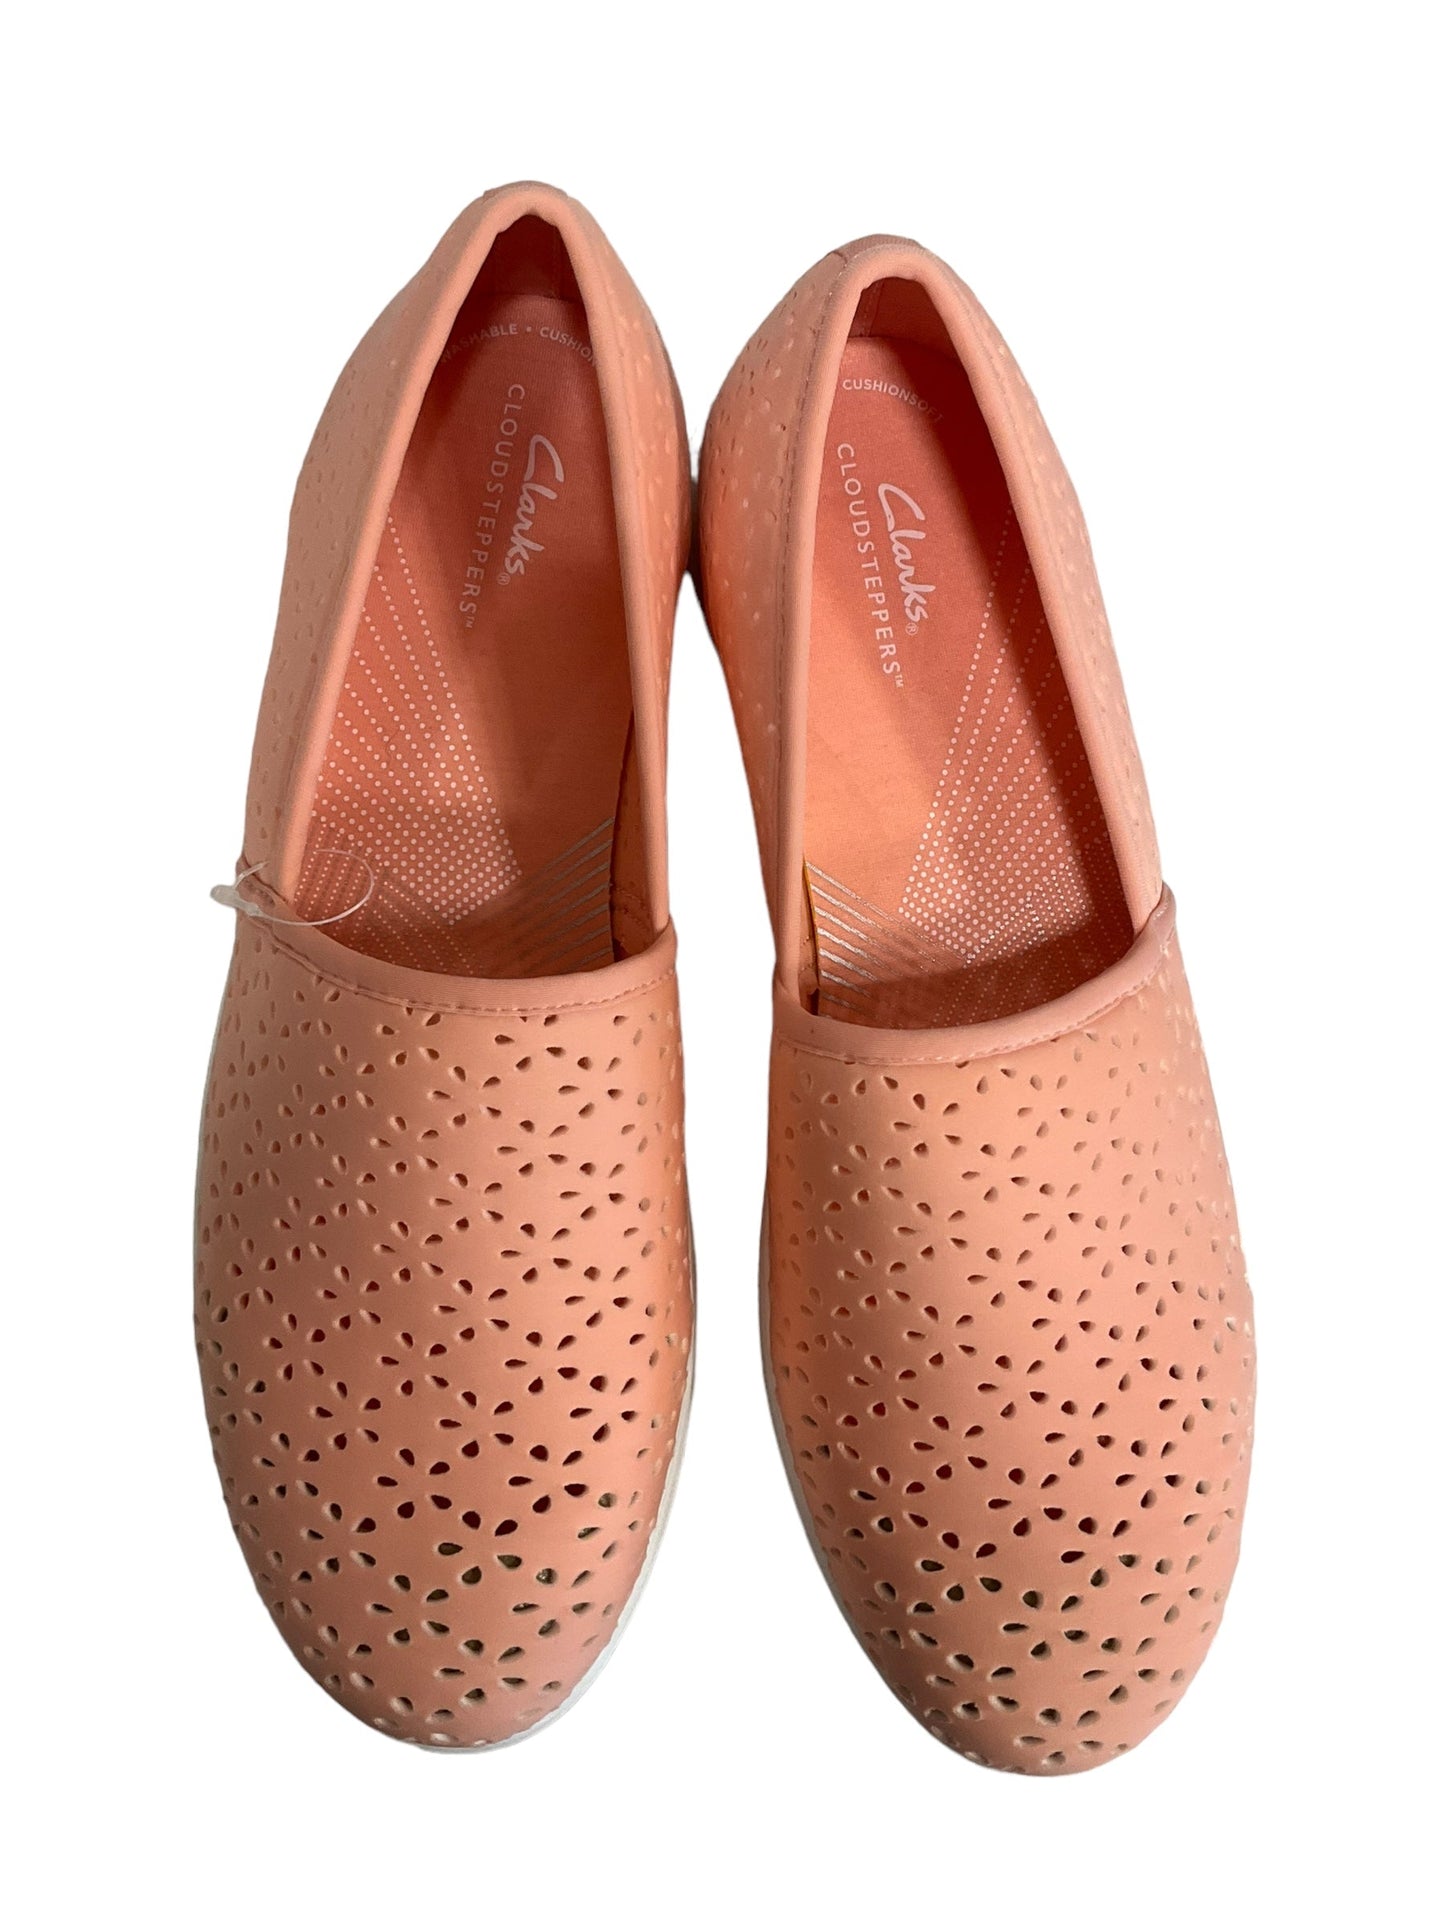 Peach Shoes Flats Clarks, Size 11